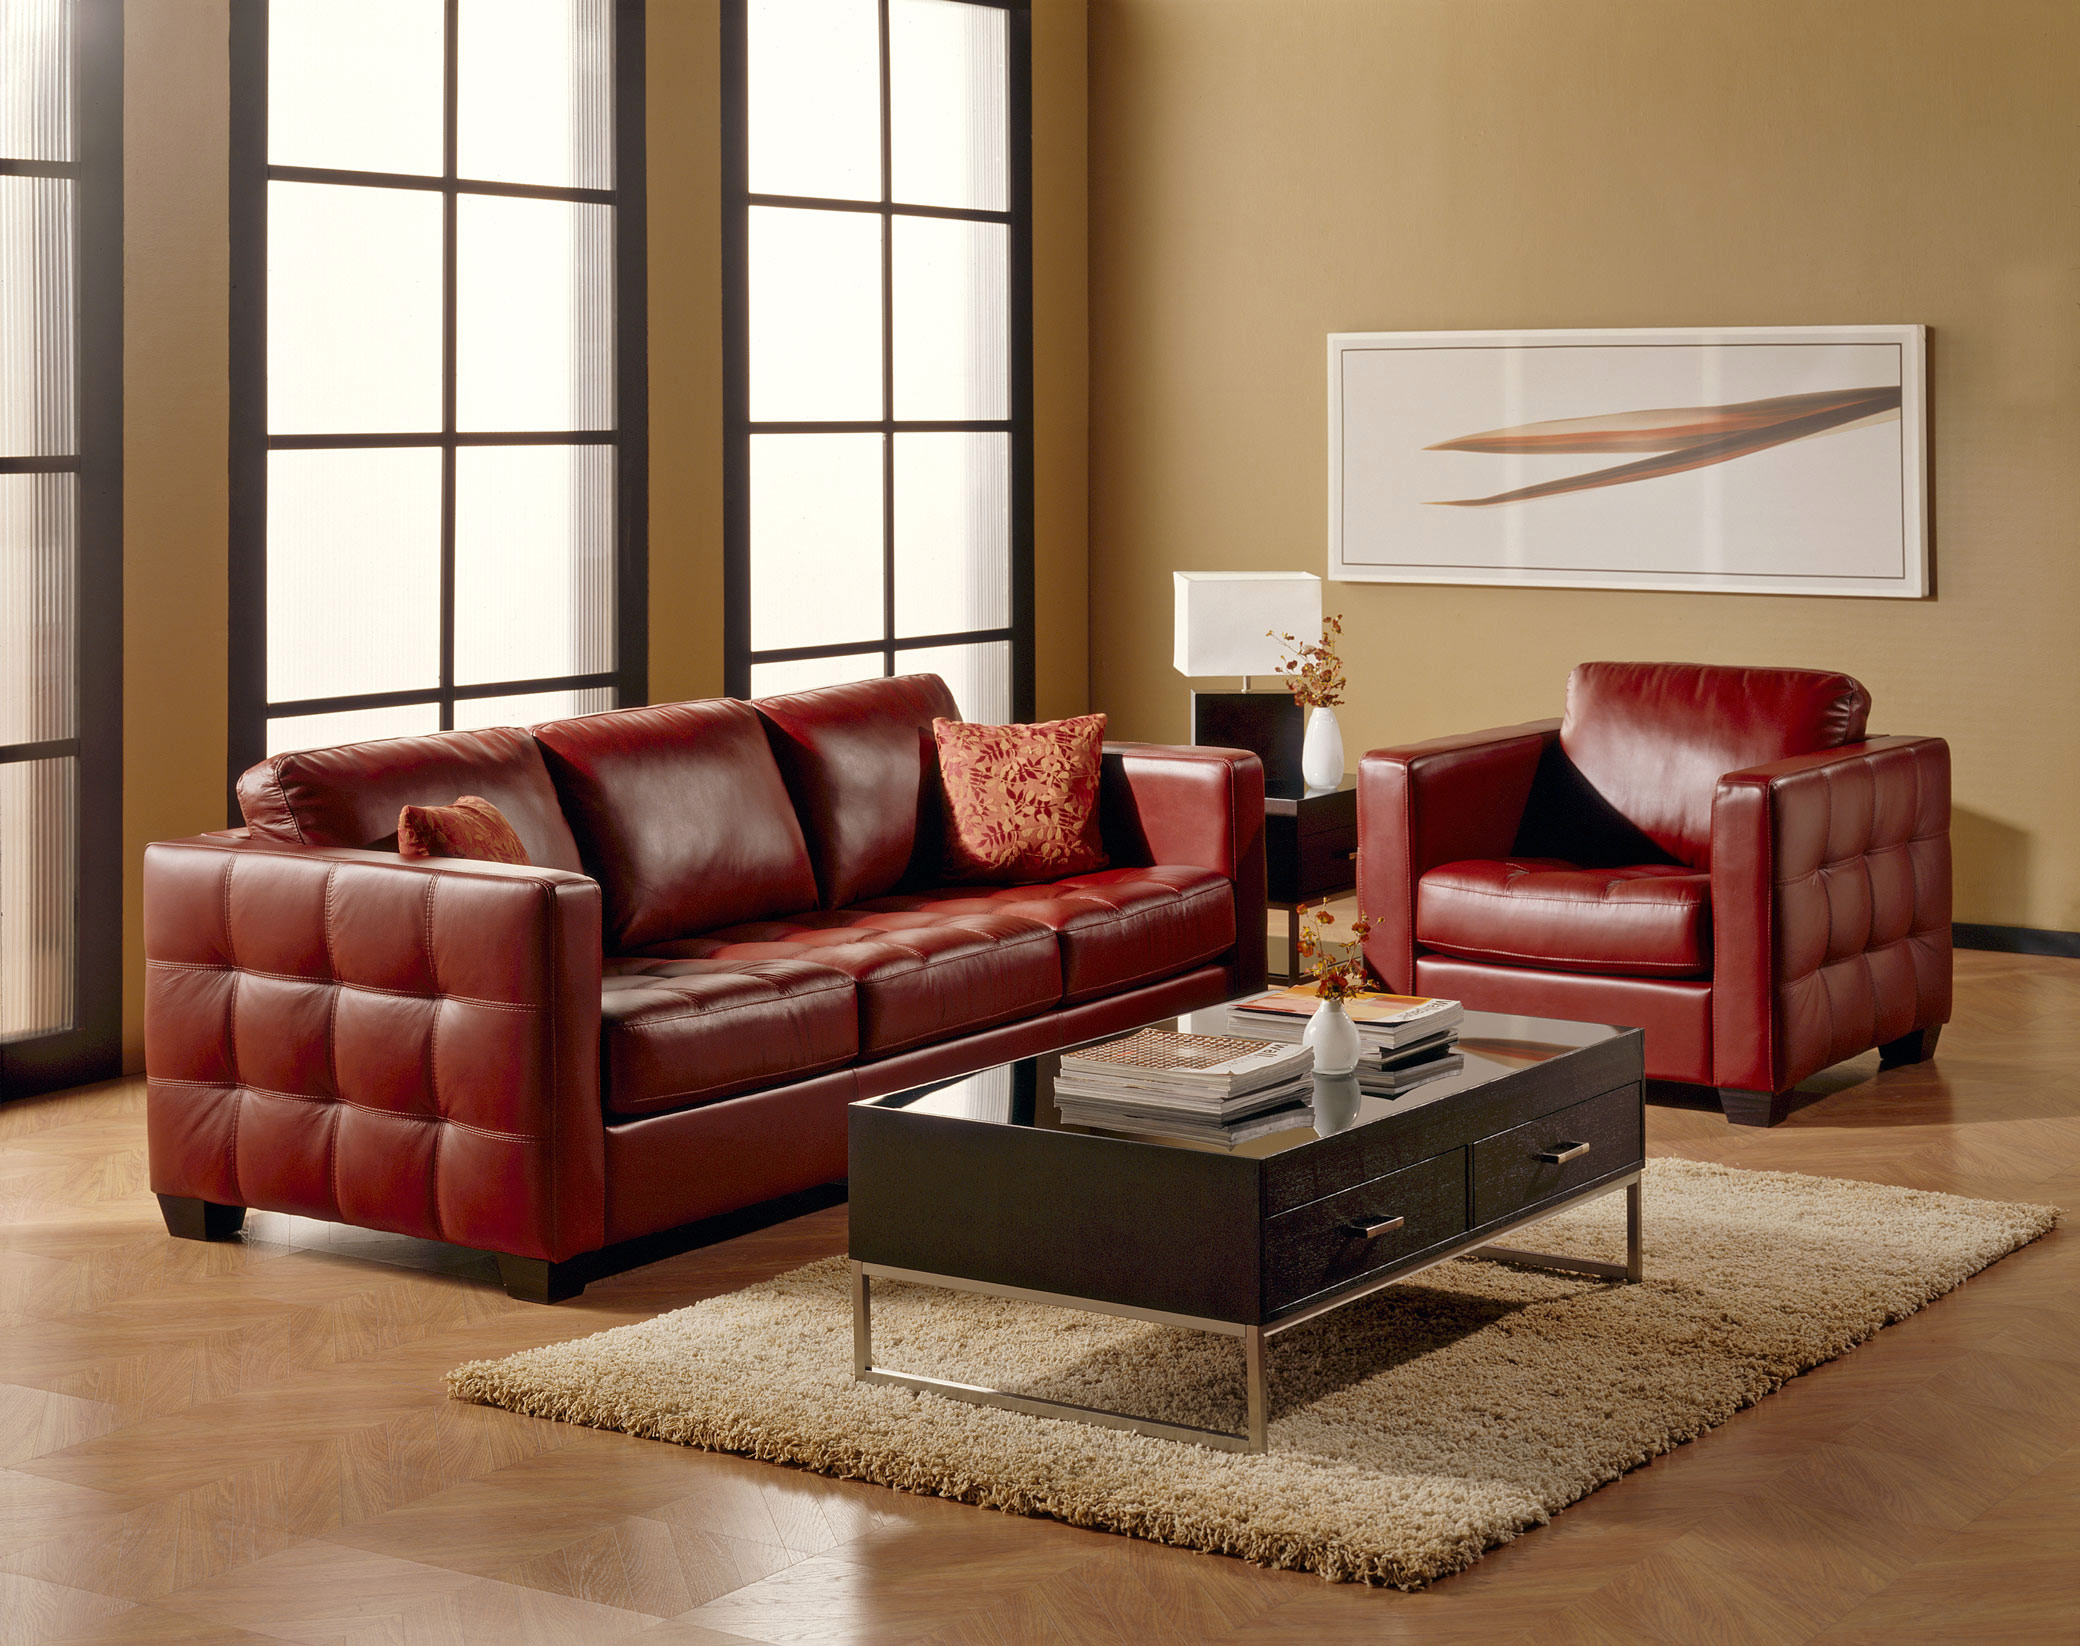 barrett leather sofa lazboy brown